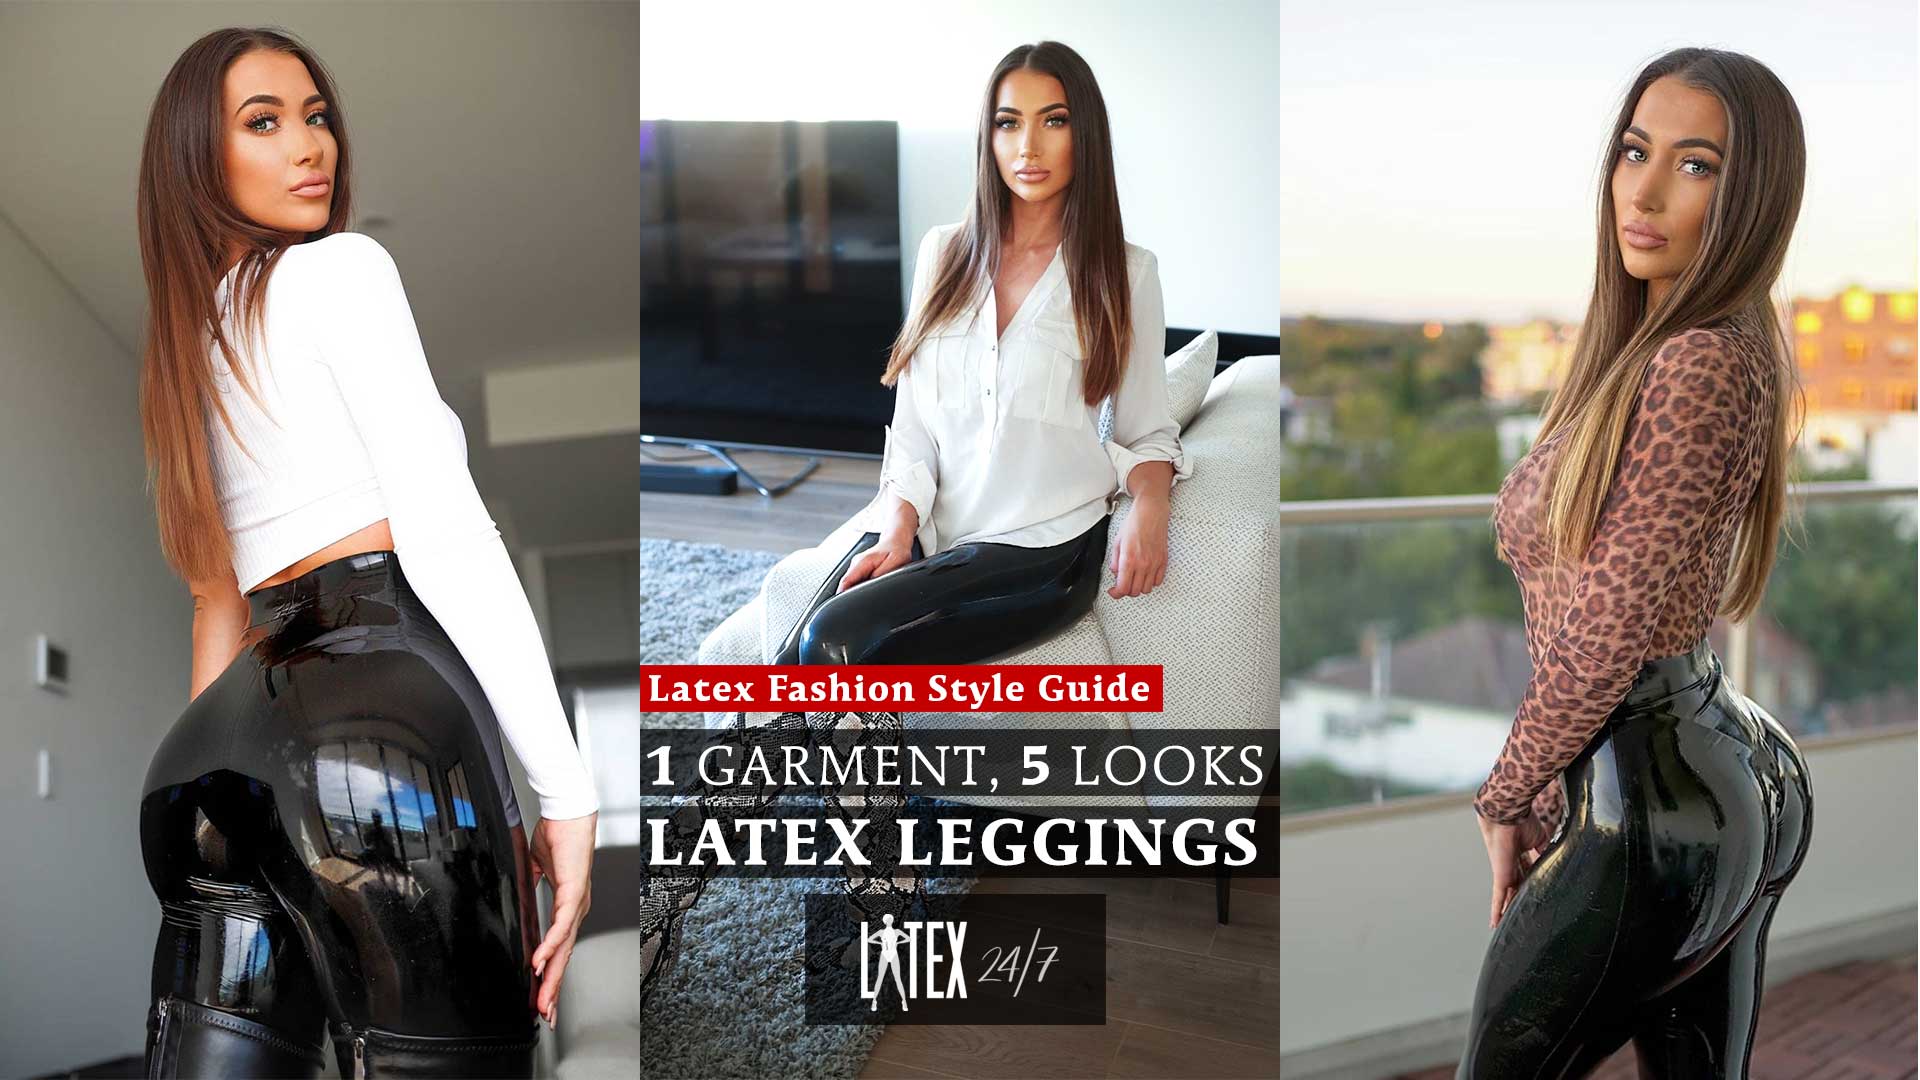 1 Latex Garment, 5 Looks - Latex Leggings